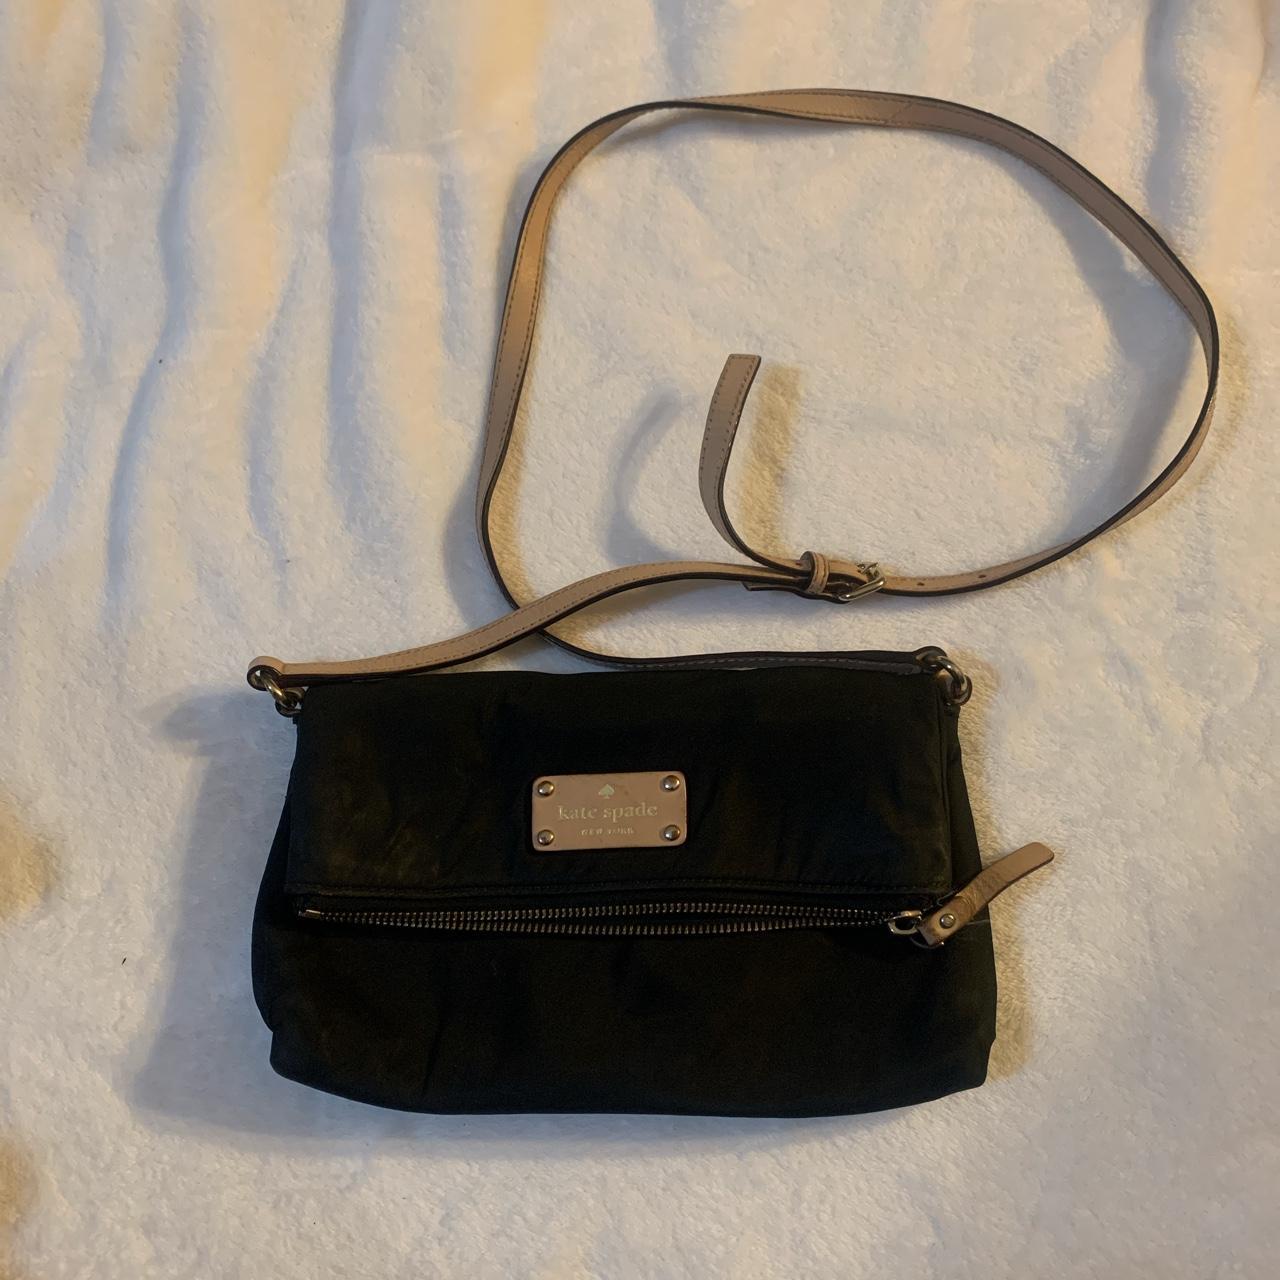 Kate Spade Phone crossbody small bag, black, tag inside